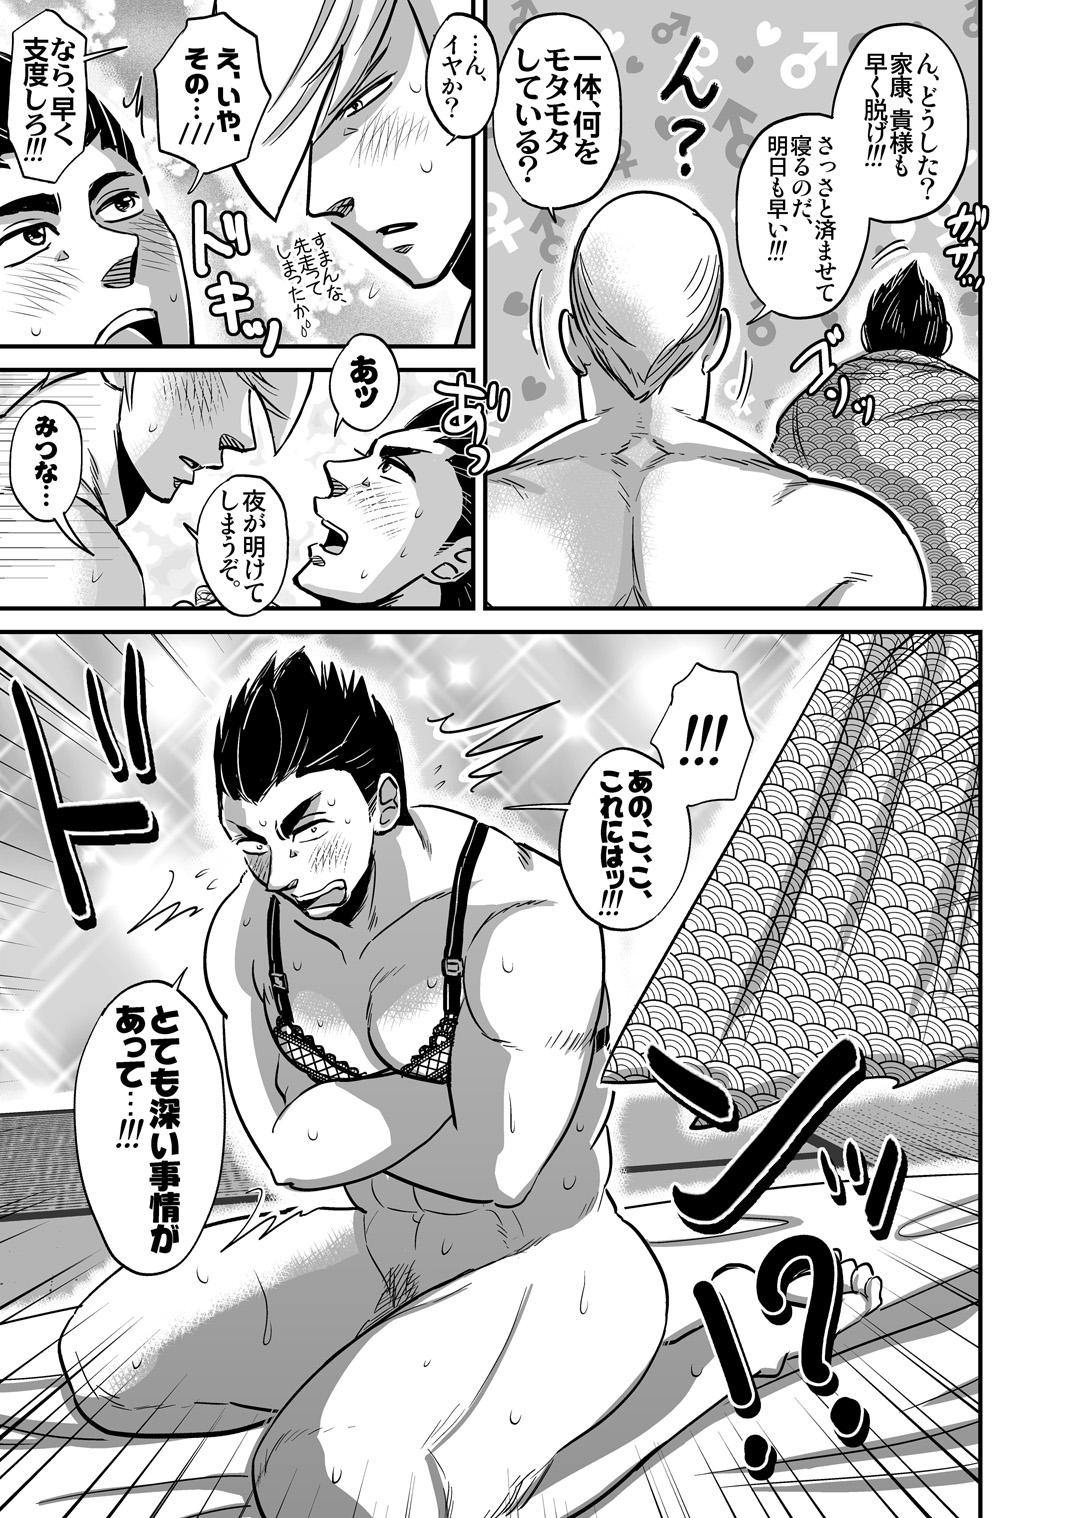 Vintage Multi-HOMO manga at home - Sengoku basara Super Hot Porn - Page 6